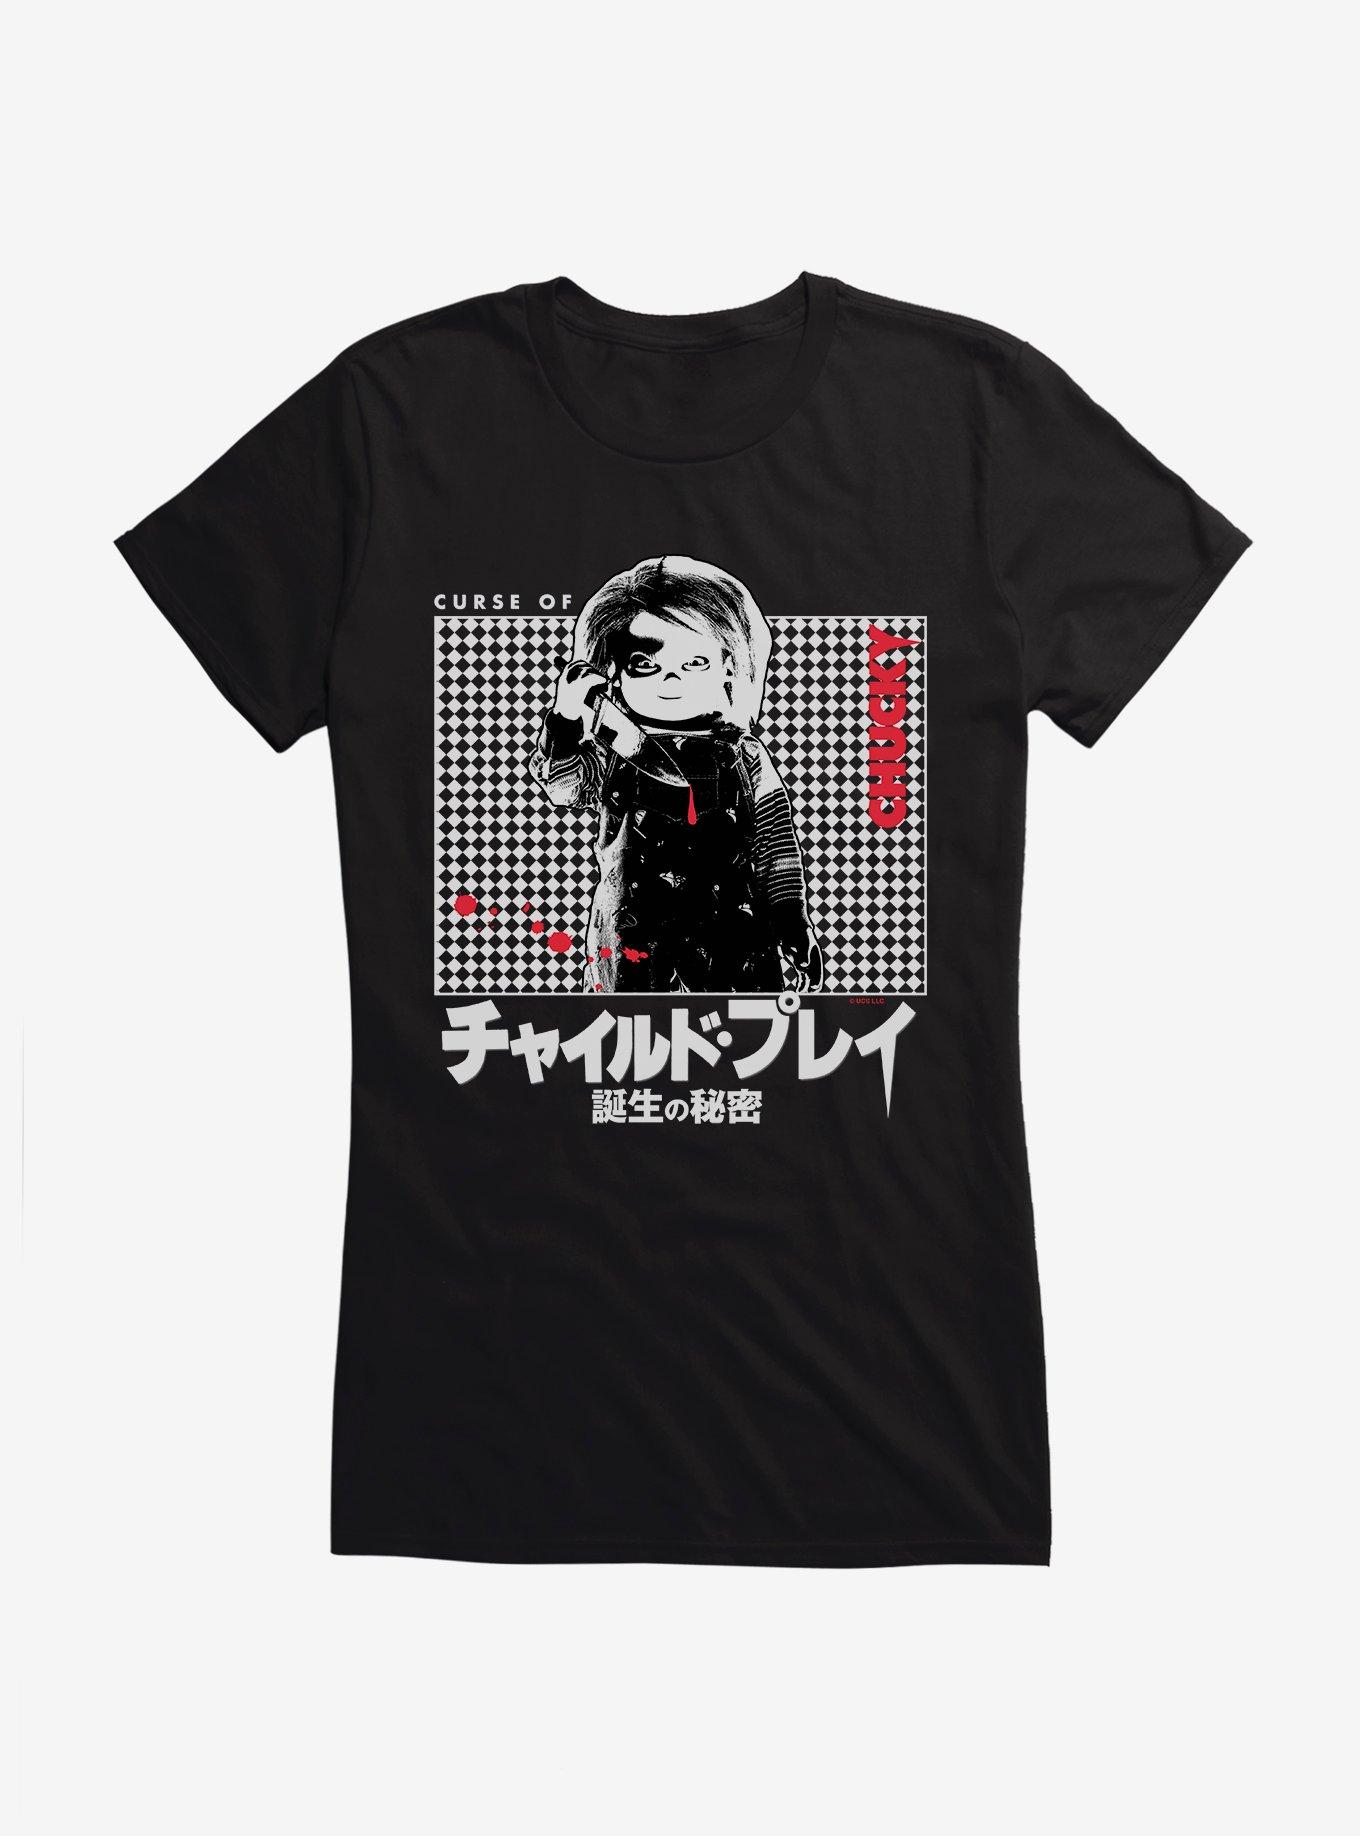 Chucky Child Play Japanese Text Girls T-Shirt | Hot Topic